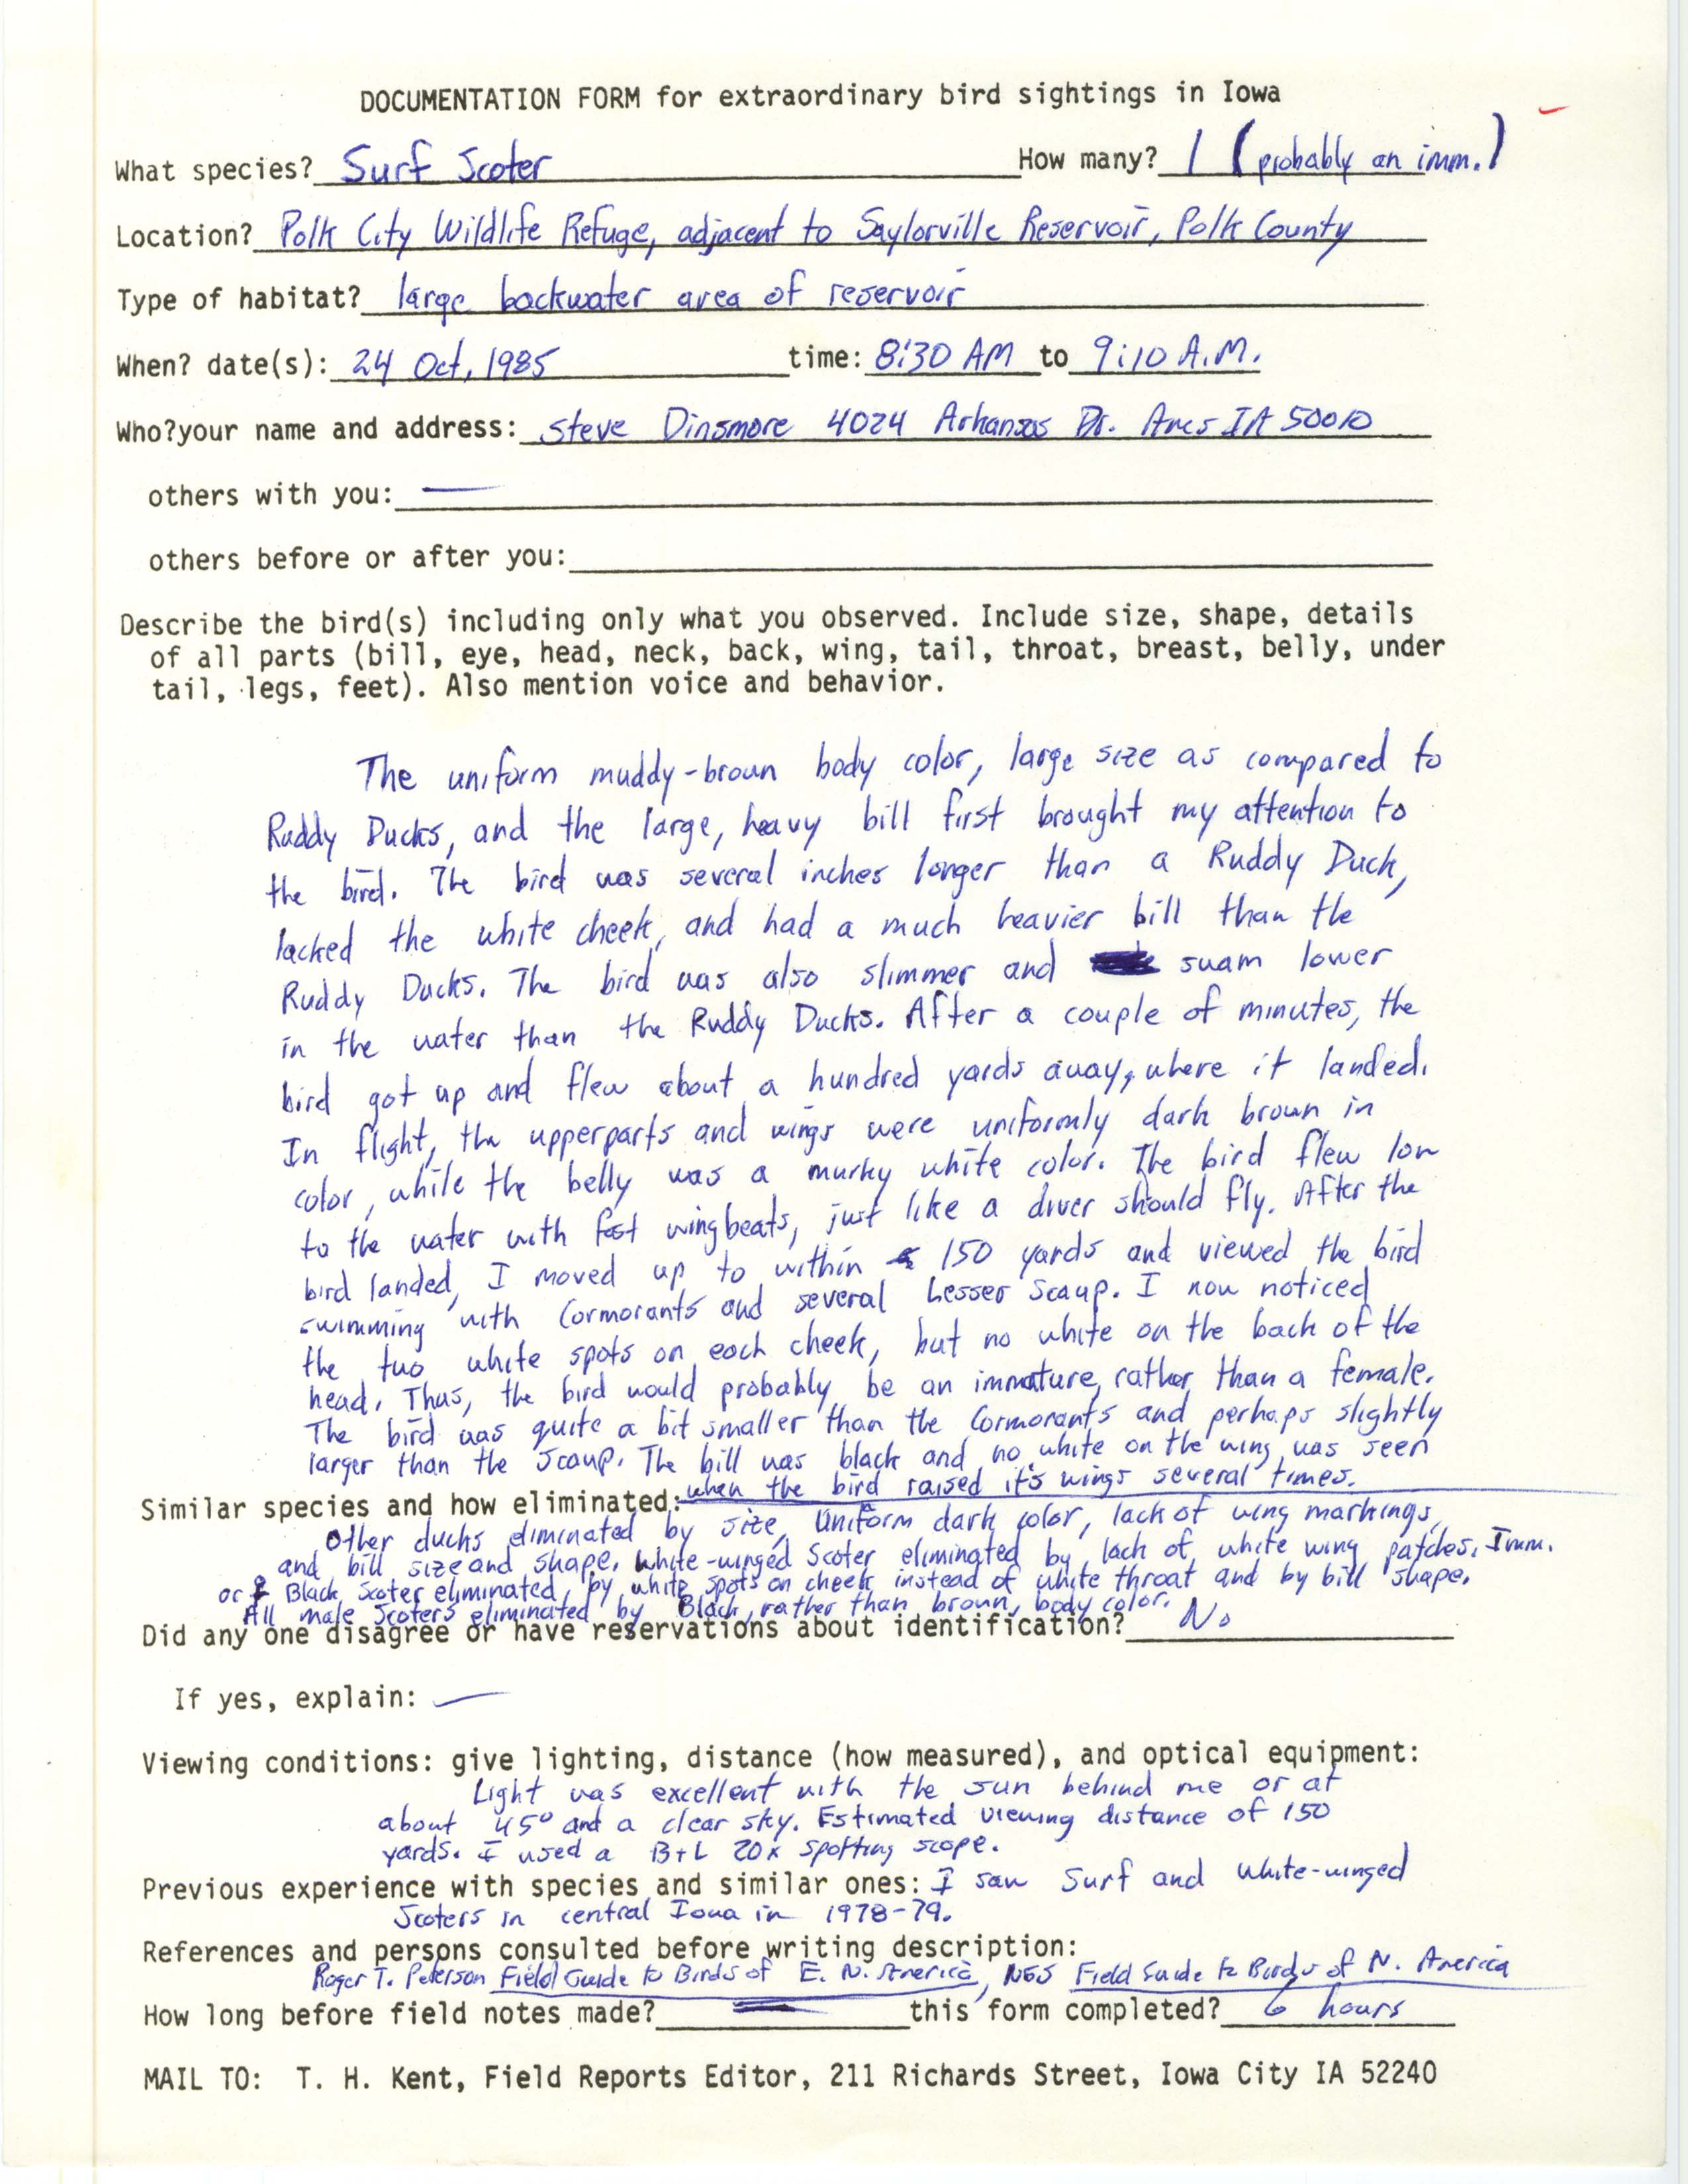 Rare bird documentation form for Surf Scoter at Saylorville Reservoir, 1985